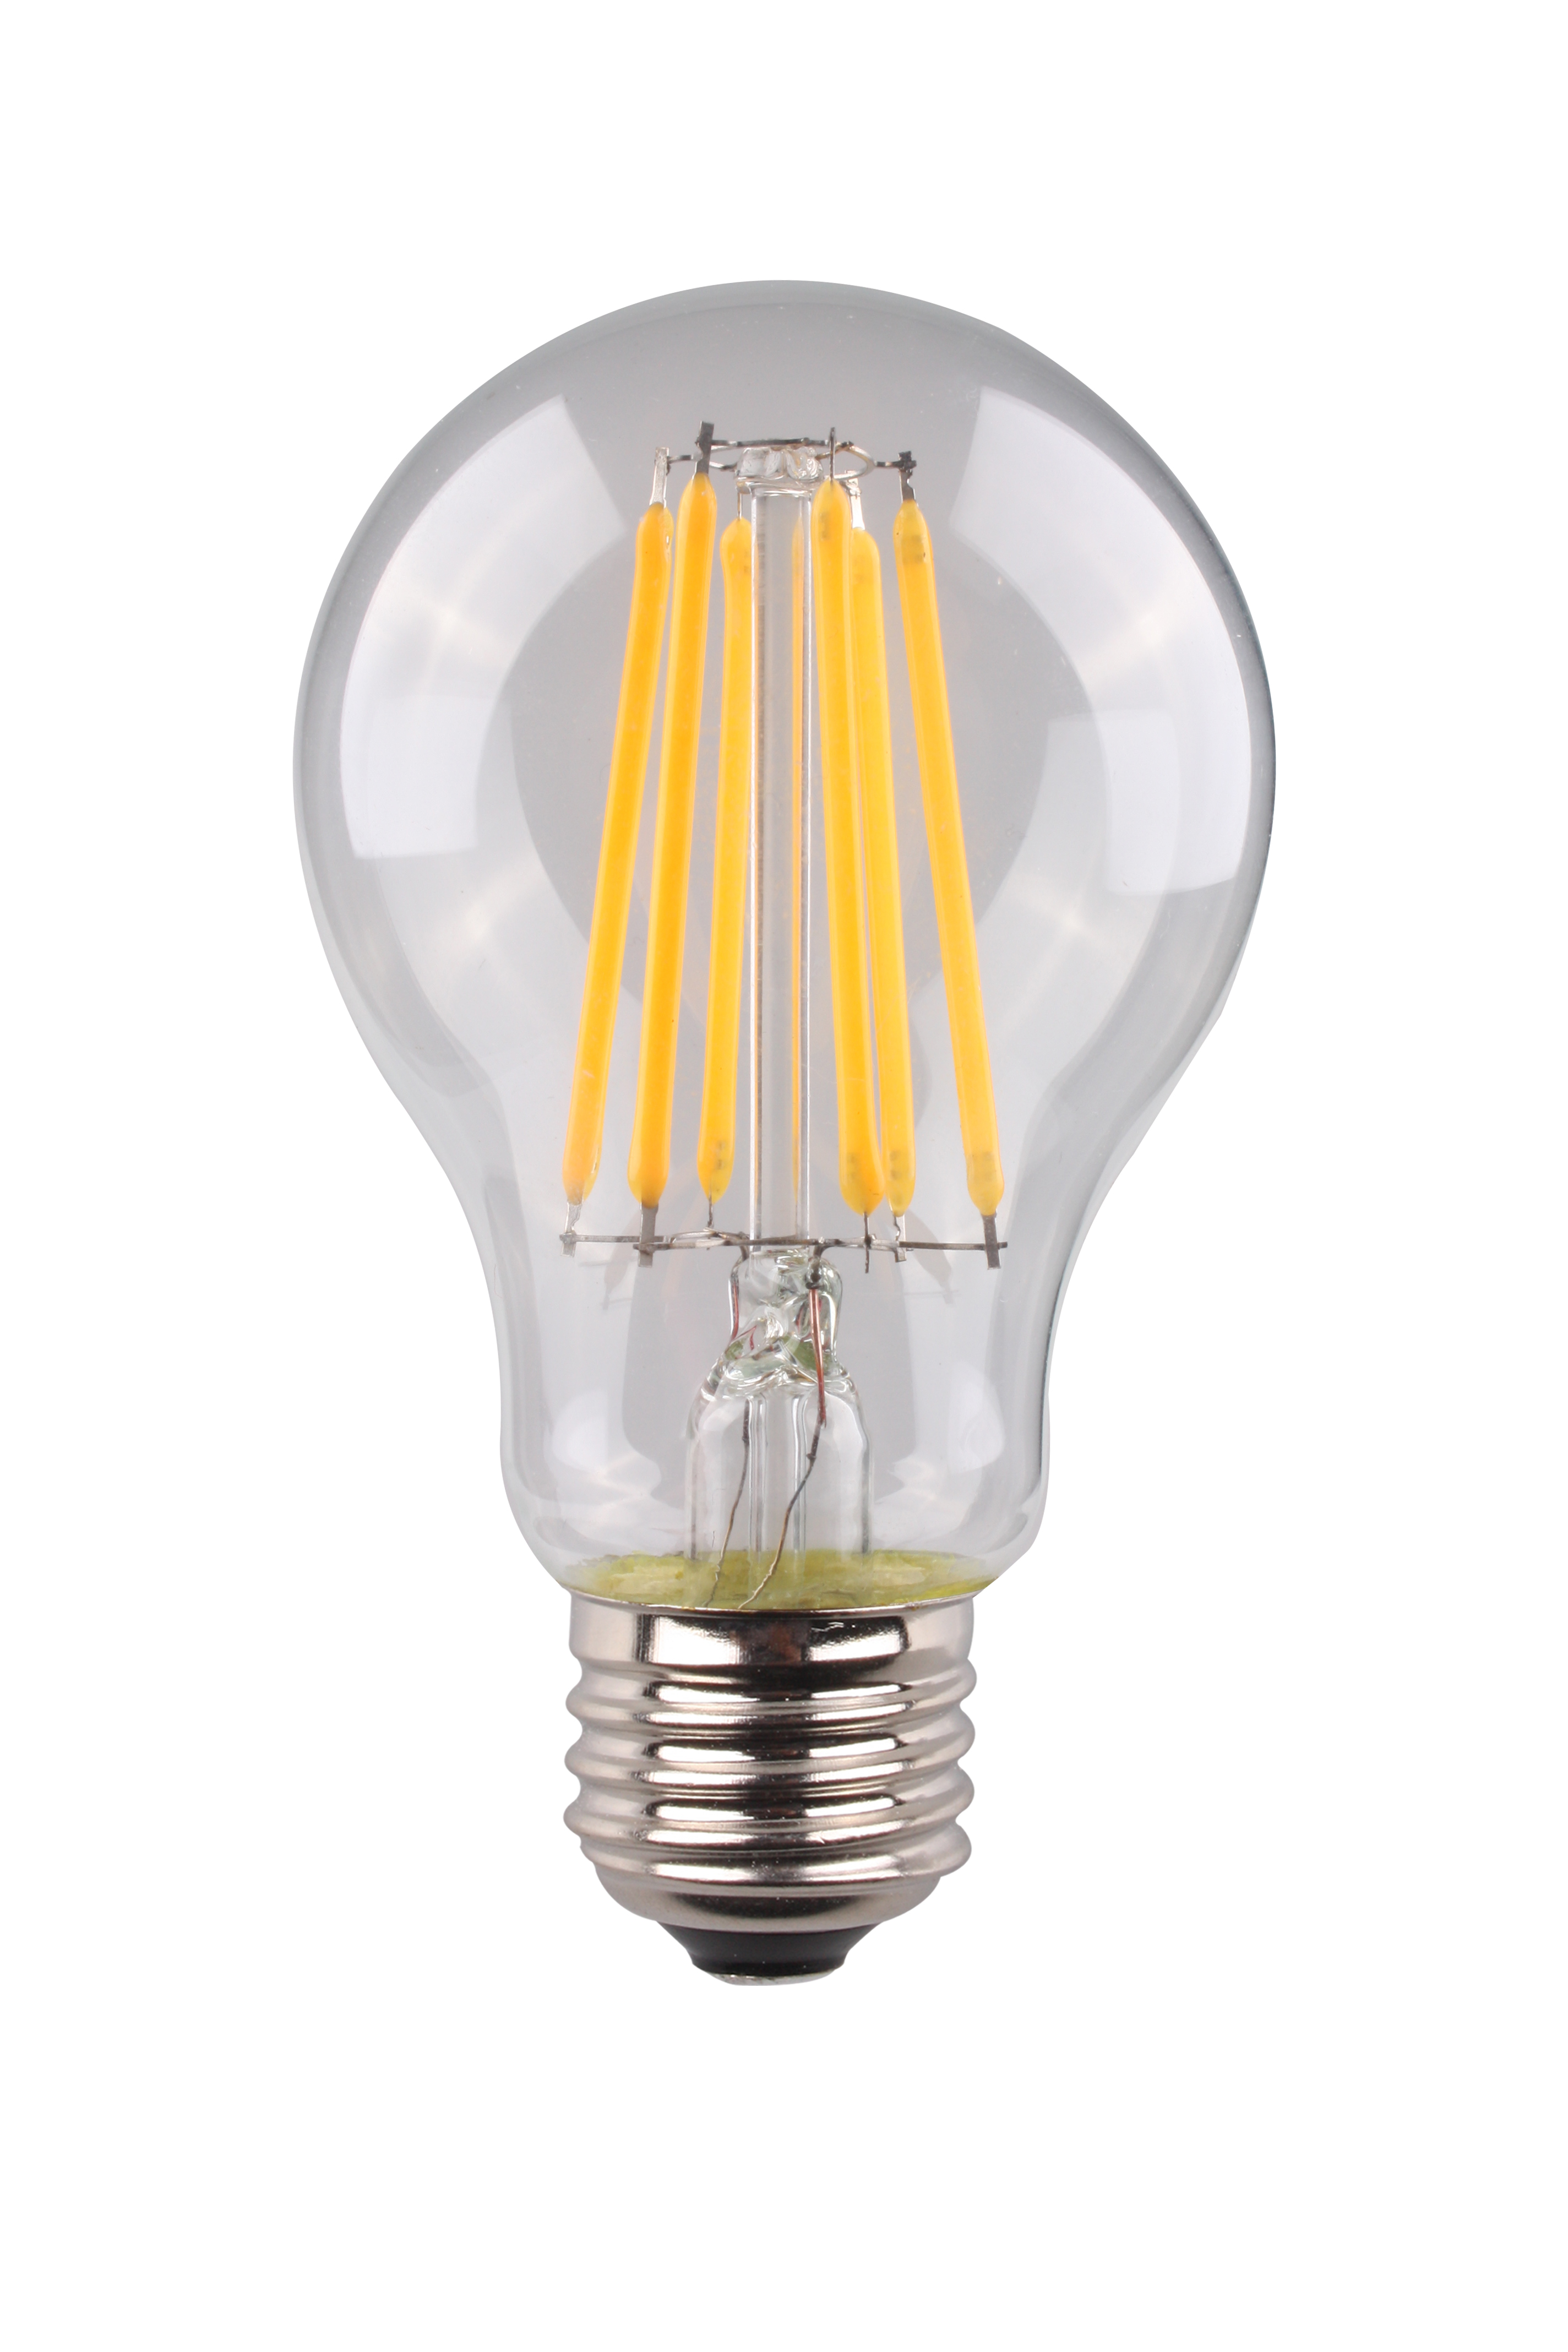 Heitec LED Lampe Glühlampenform Filament A60 E27 12 Watt 1050 Lumen 830 3000 Kelvin warmweiß